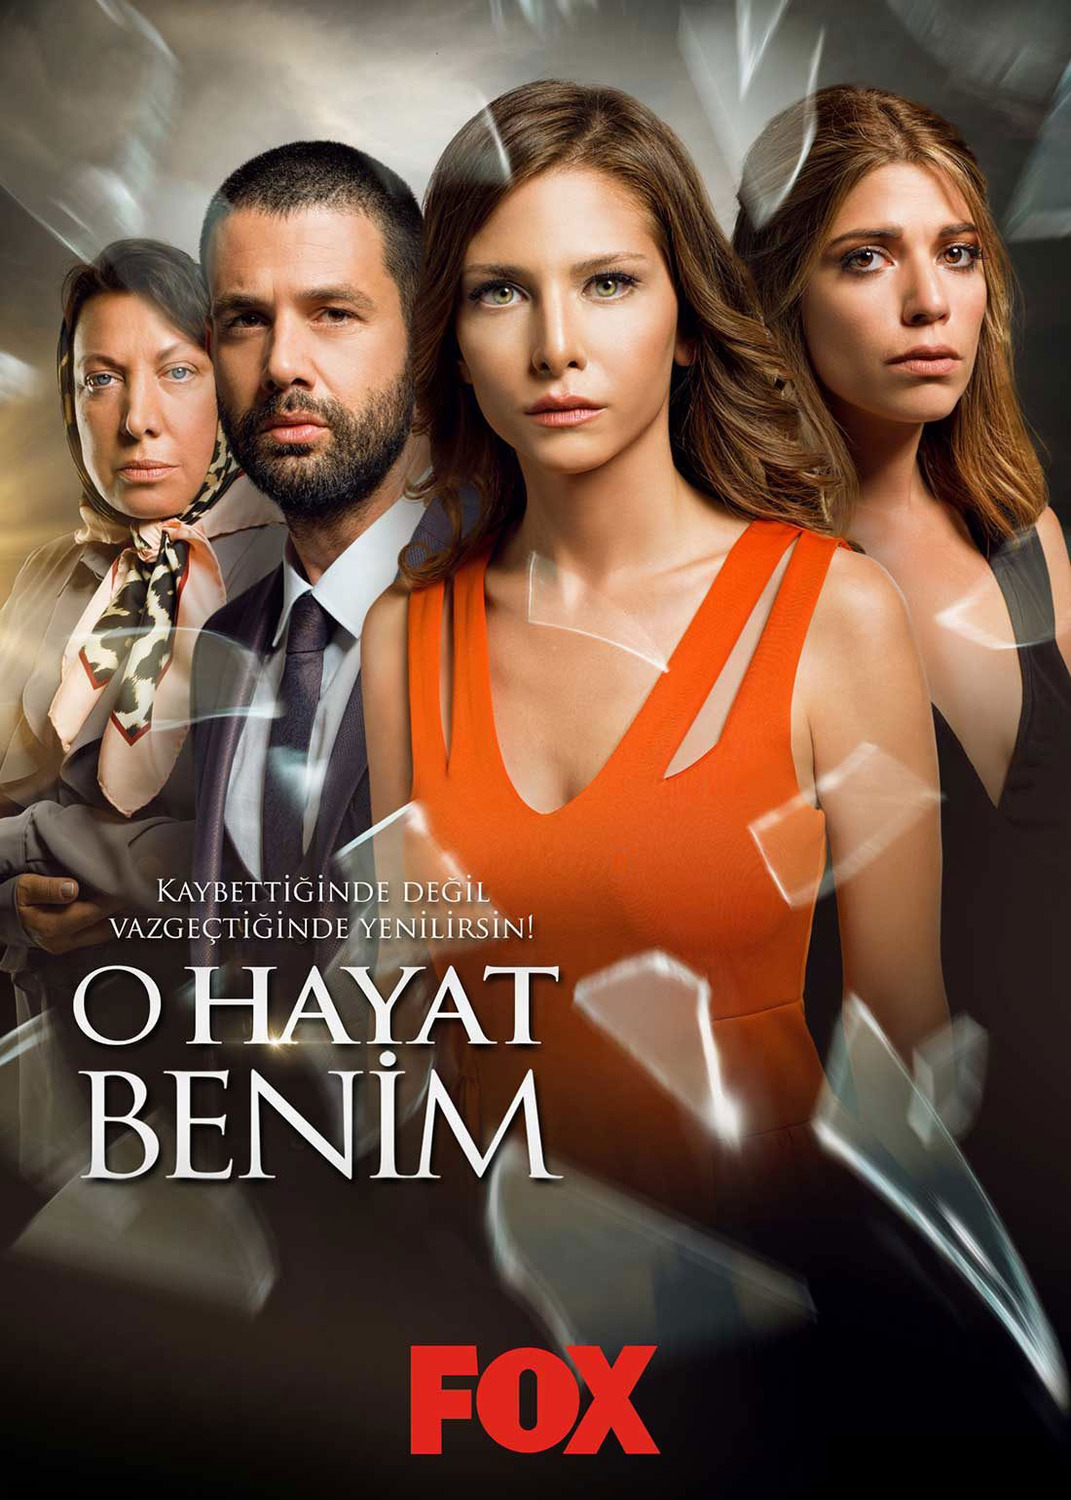 Extra Large TV Poster Image for O Hayat Benim (#2 of 4)